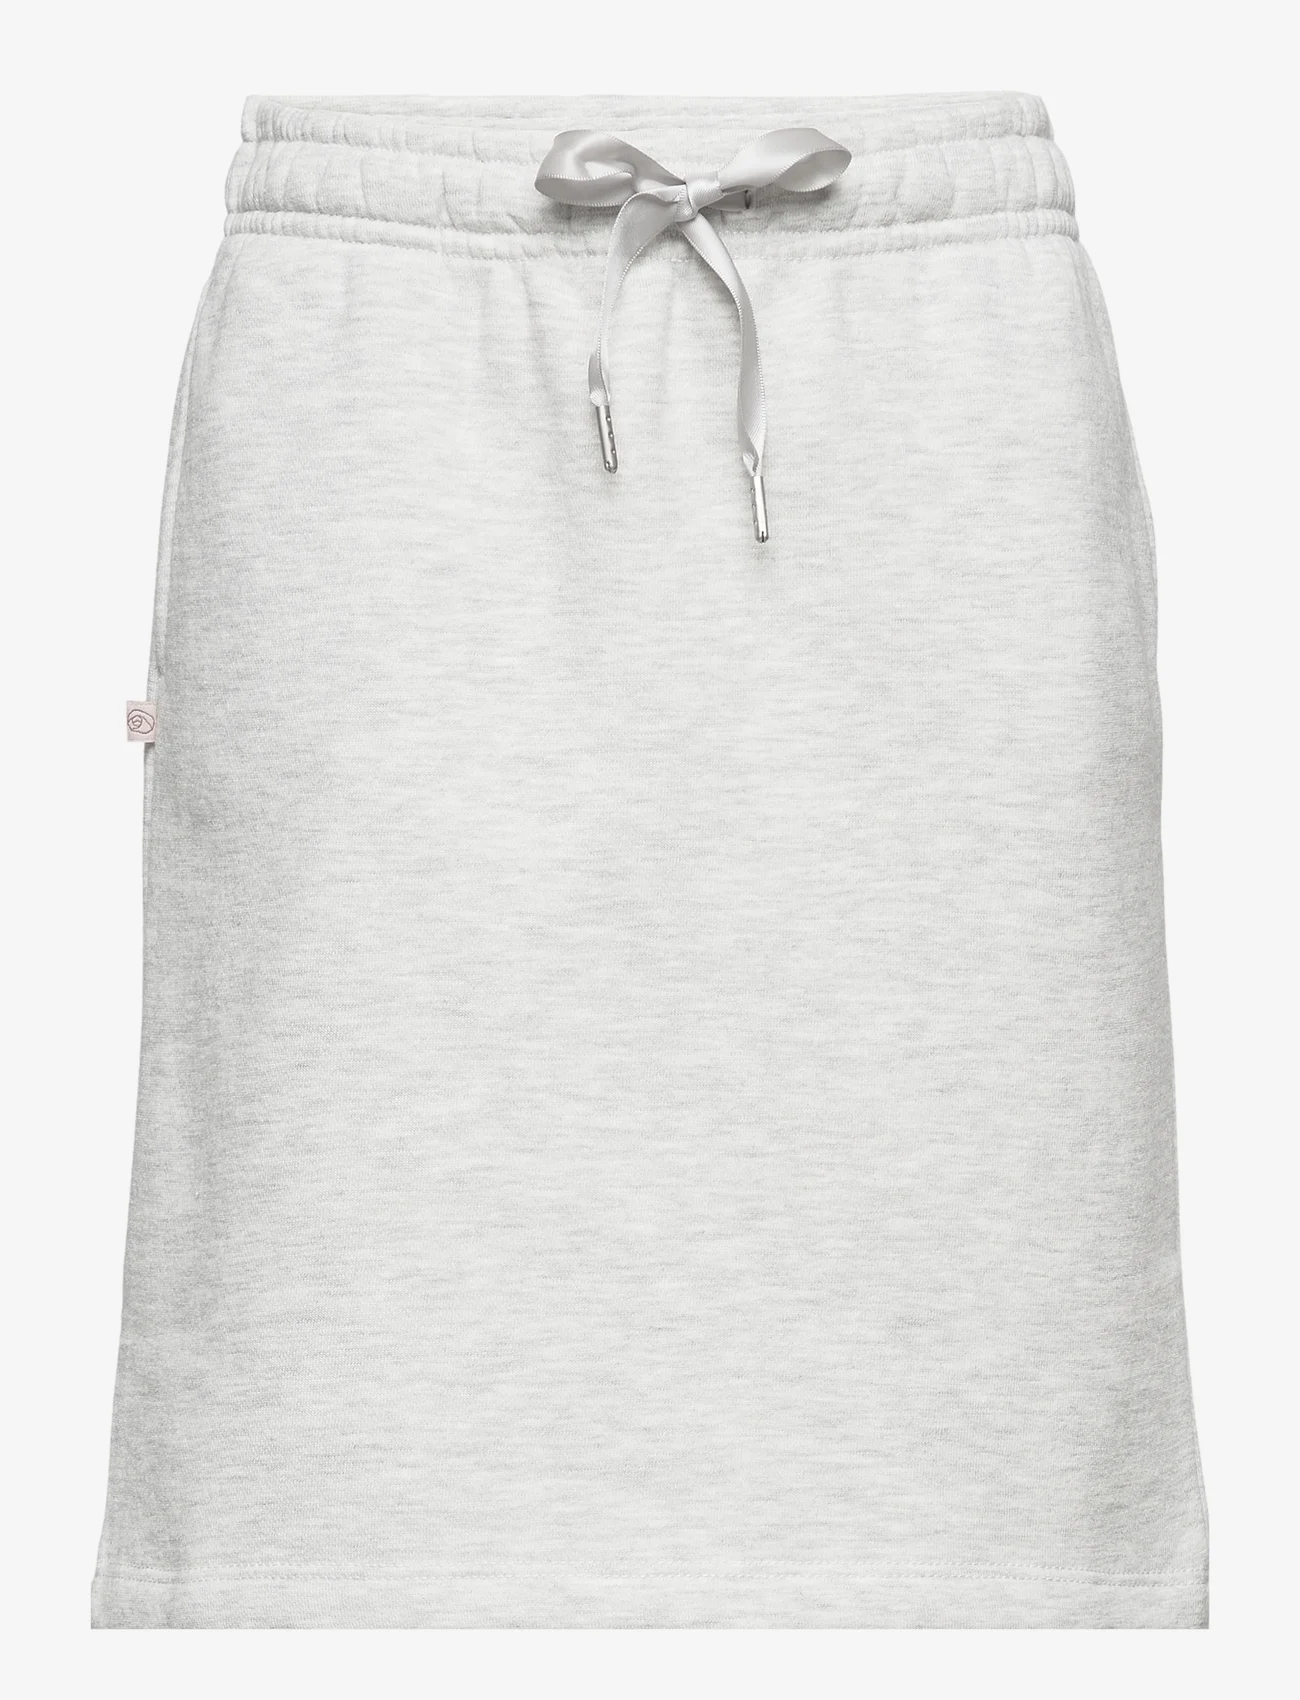 Rosemunde Kids - Skirt - kurze röcke - silver grey melange - 0